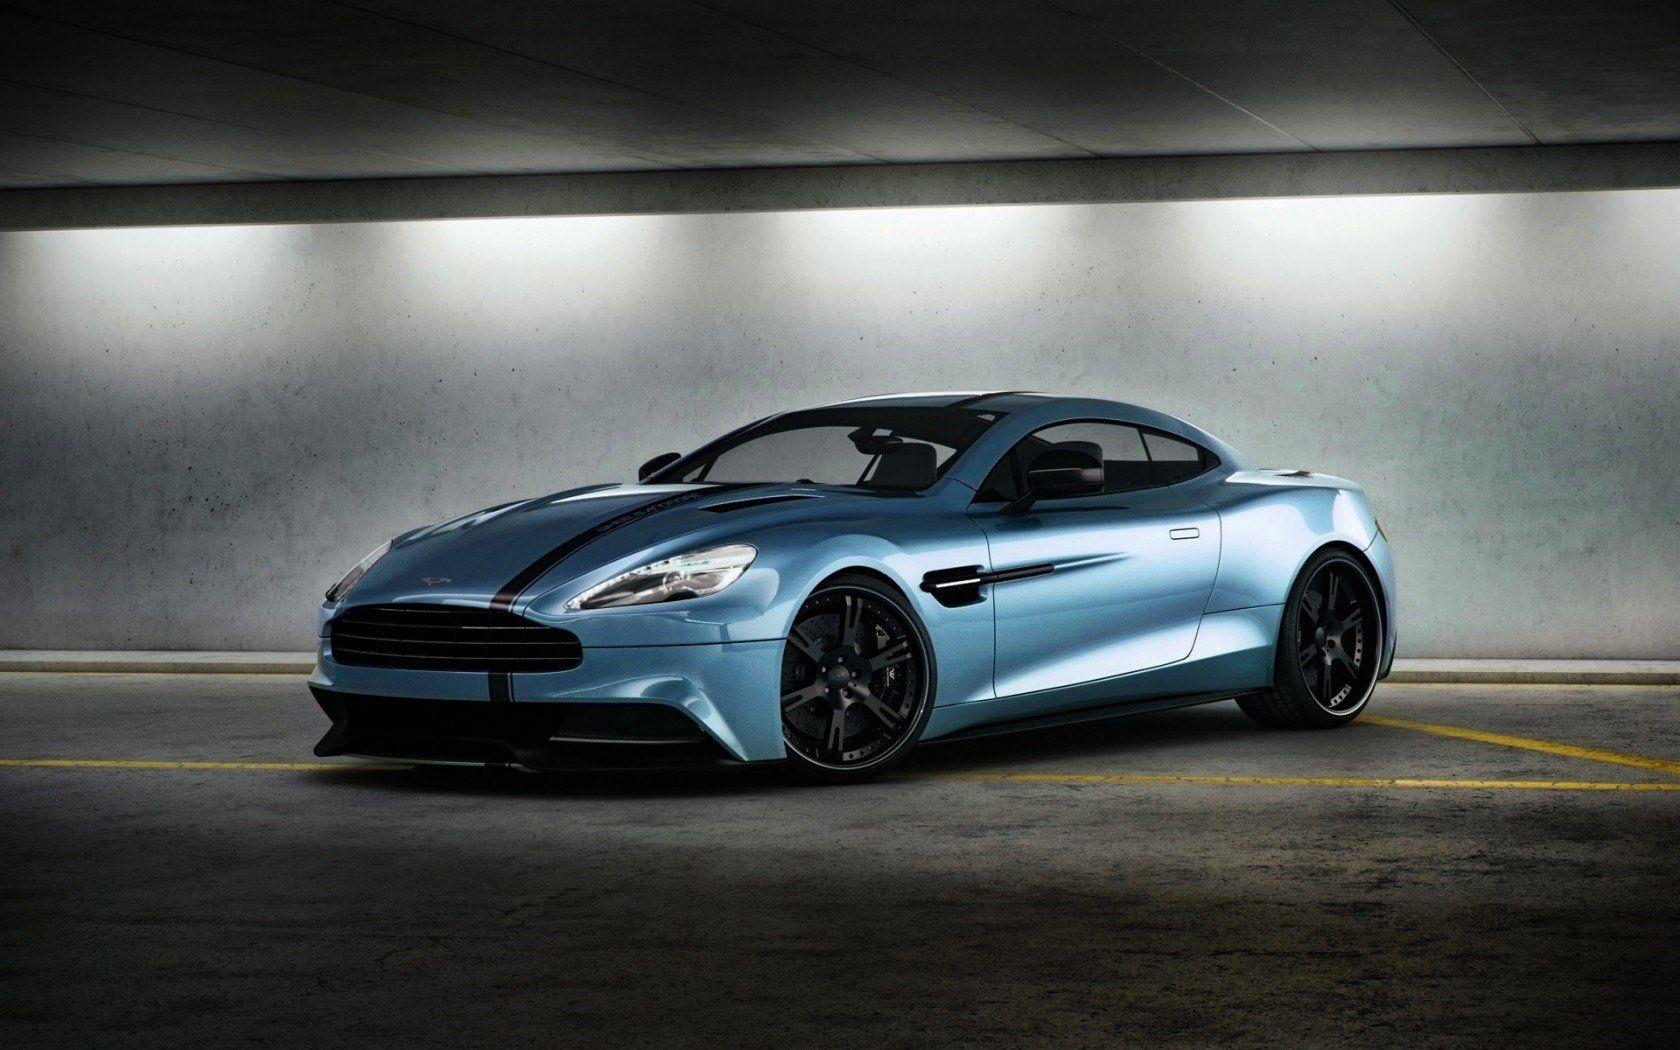 Aston Martin Vanquish Wallpaper In High Quality